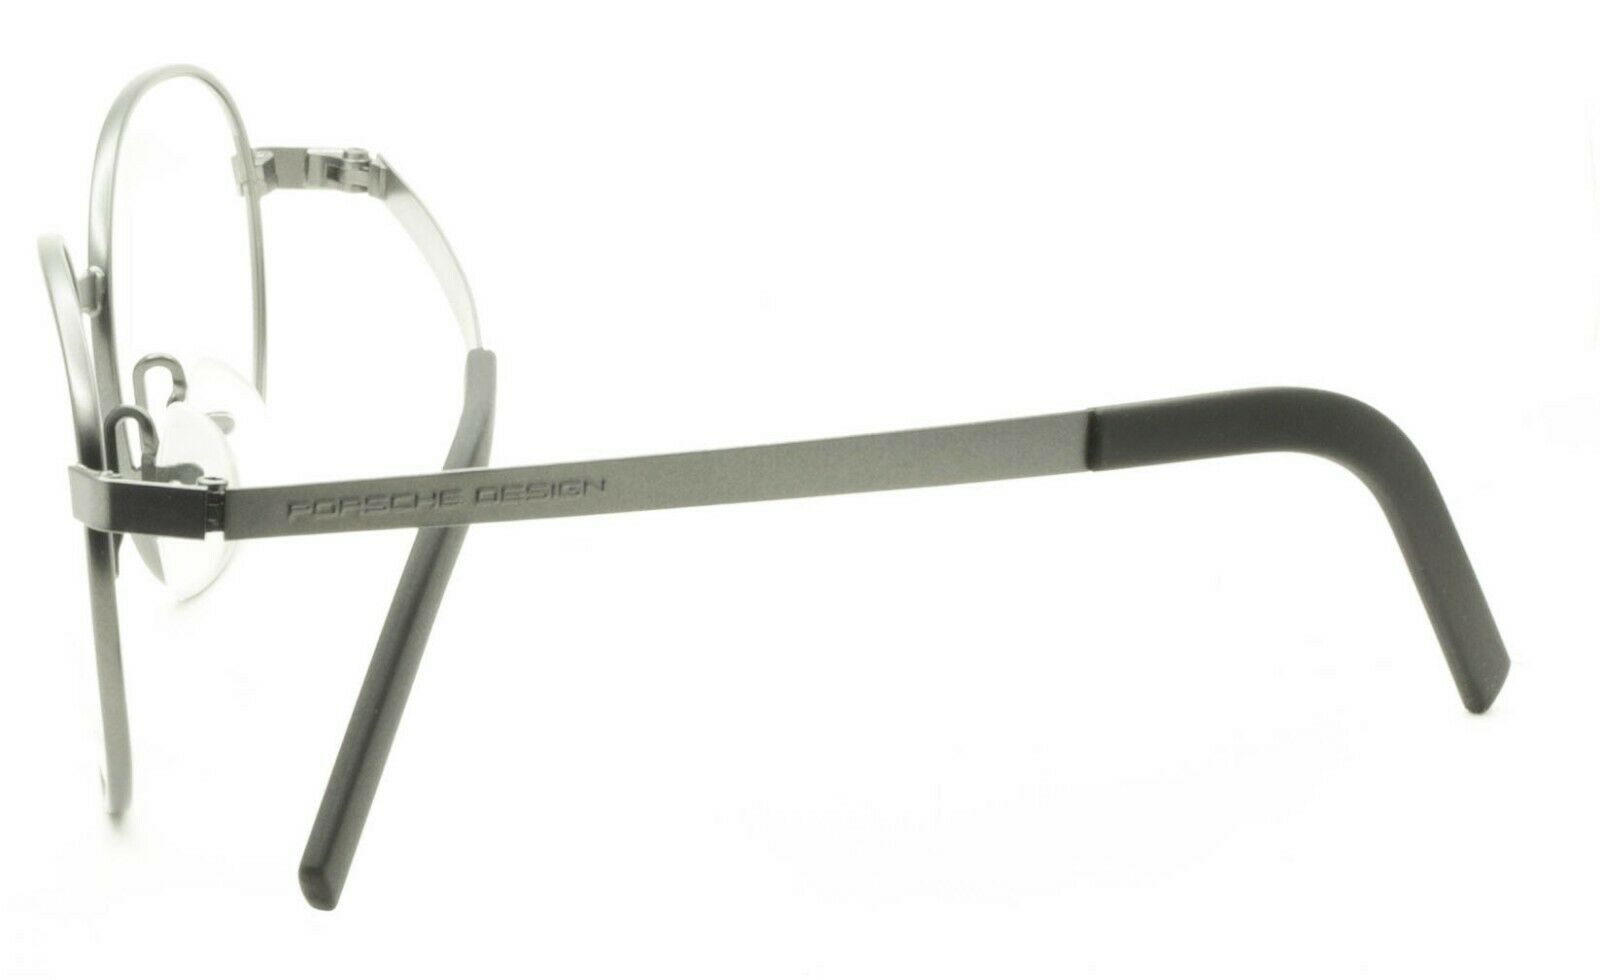 PORSCHE DESIGN P8315 D 50mm Eyewear RX Optical FRAMES Glasses Eyeglasses - Italy